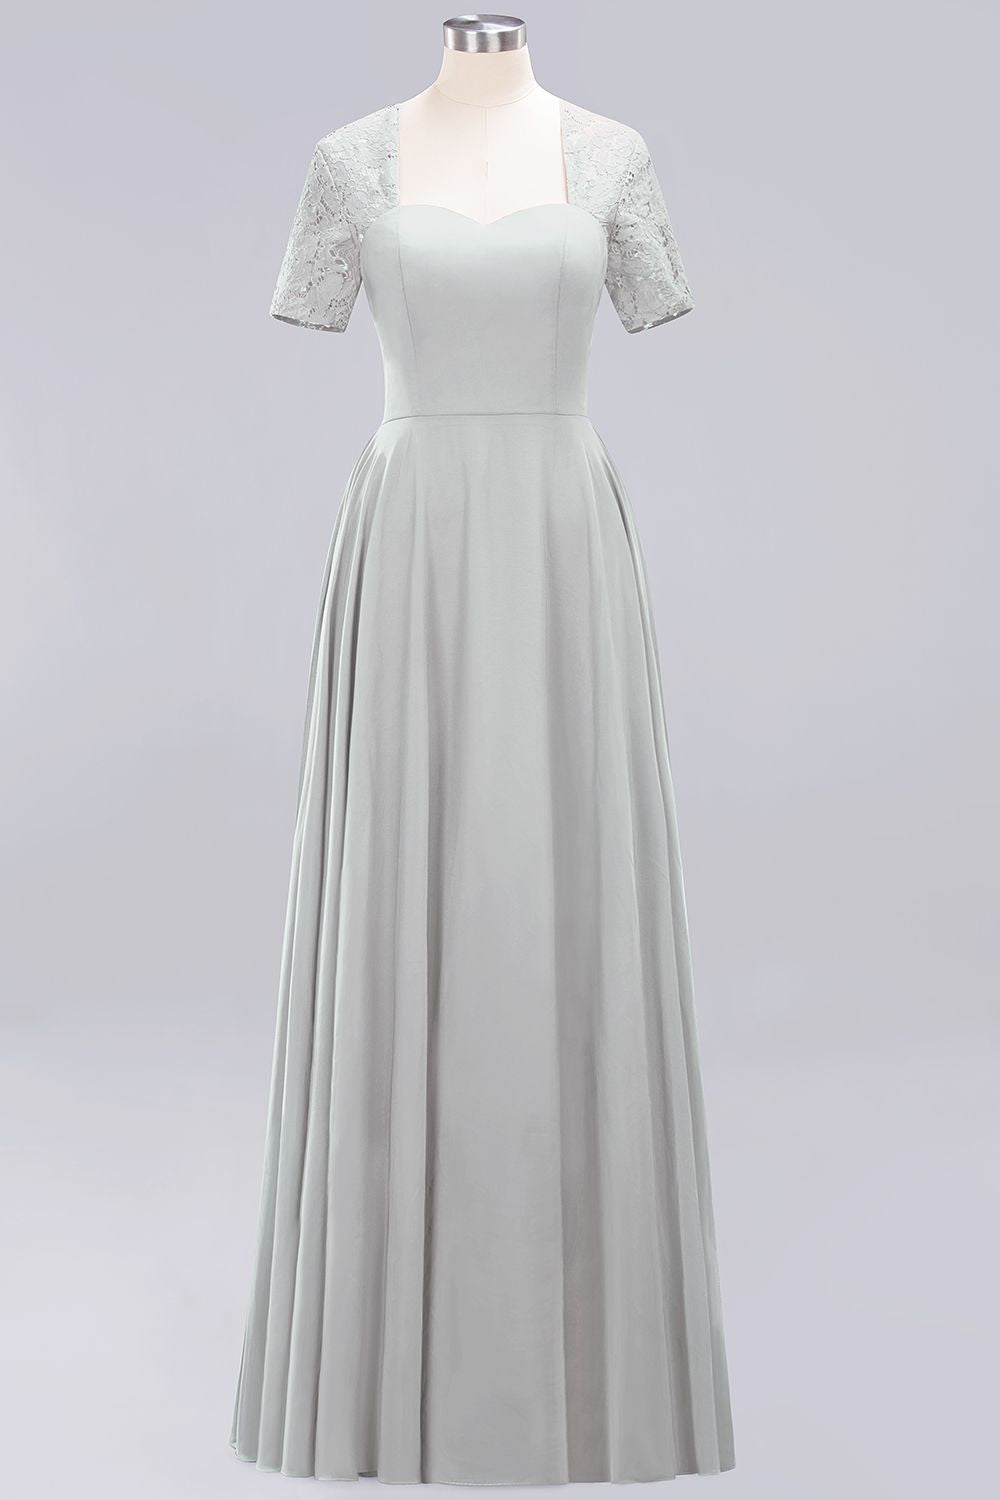 Dark Navy Open-Back Long Bridesmaid Dress With Short Sleeves-27dress